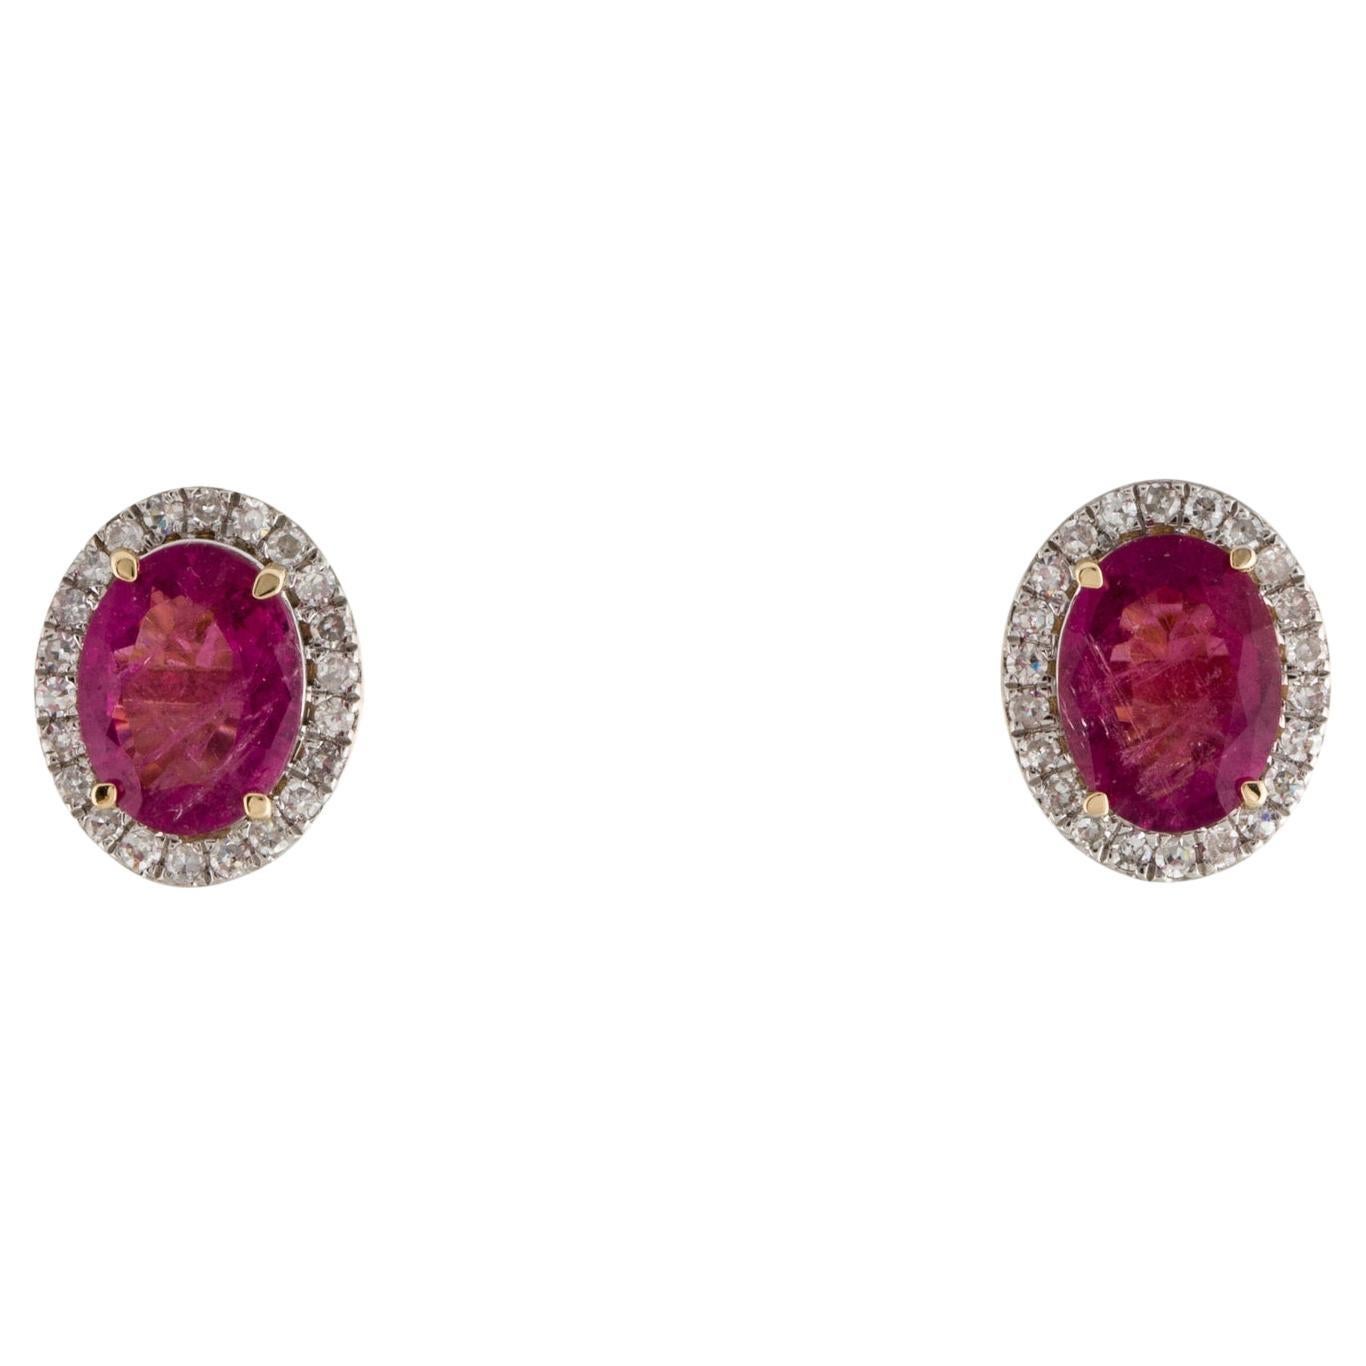 Sparkling 14K Tourmaline & Diamond Stud Earrings - Exquisite Gemstone Jewelry For Sale